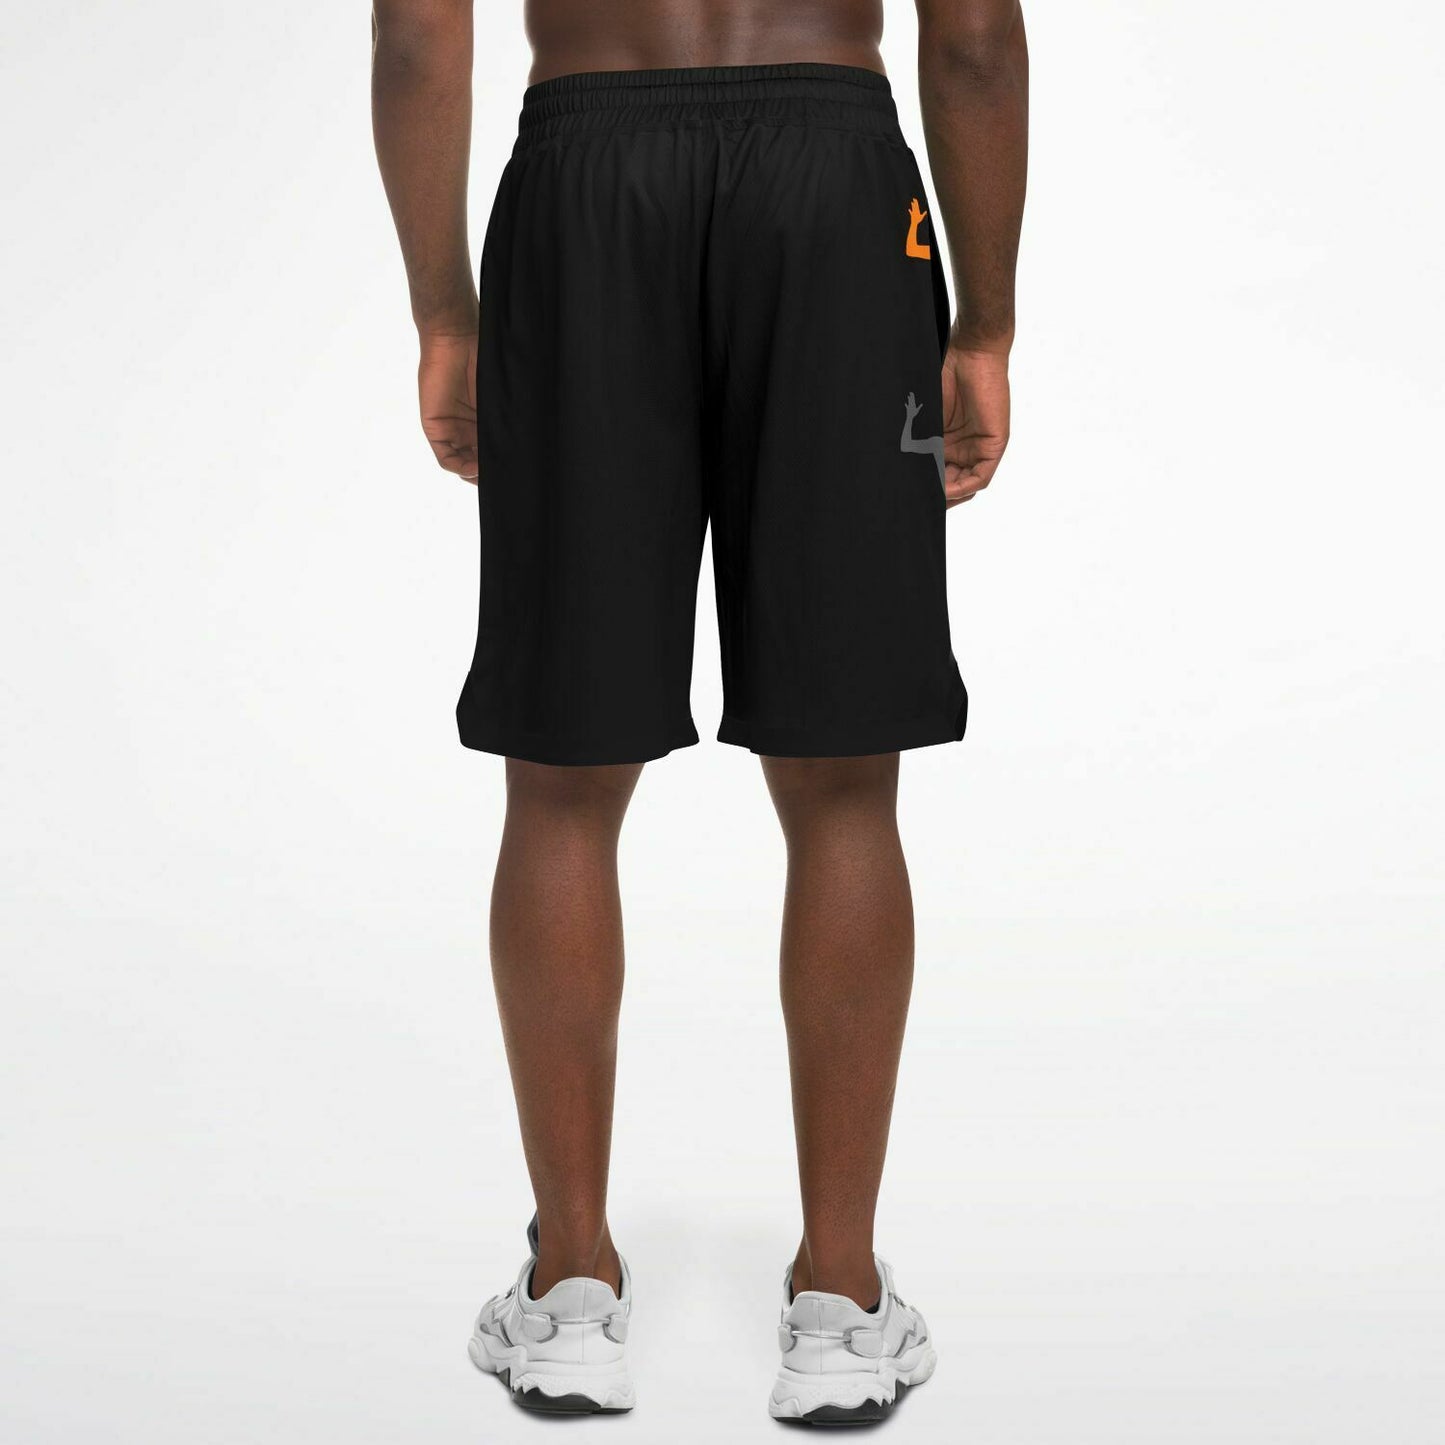 Duntalk "Body A Man" Classic Basketball Shorts Black